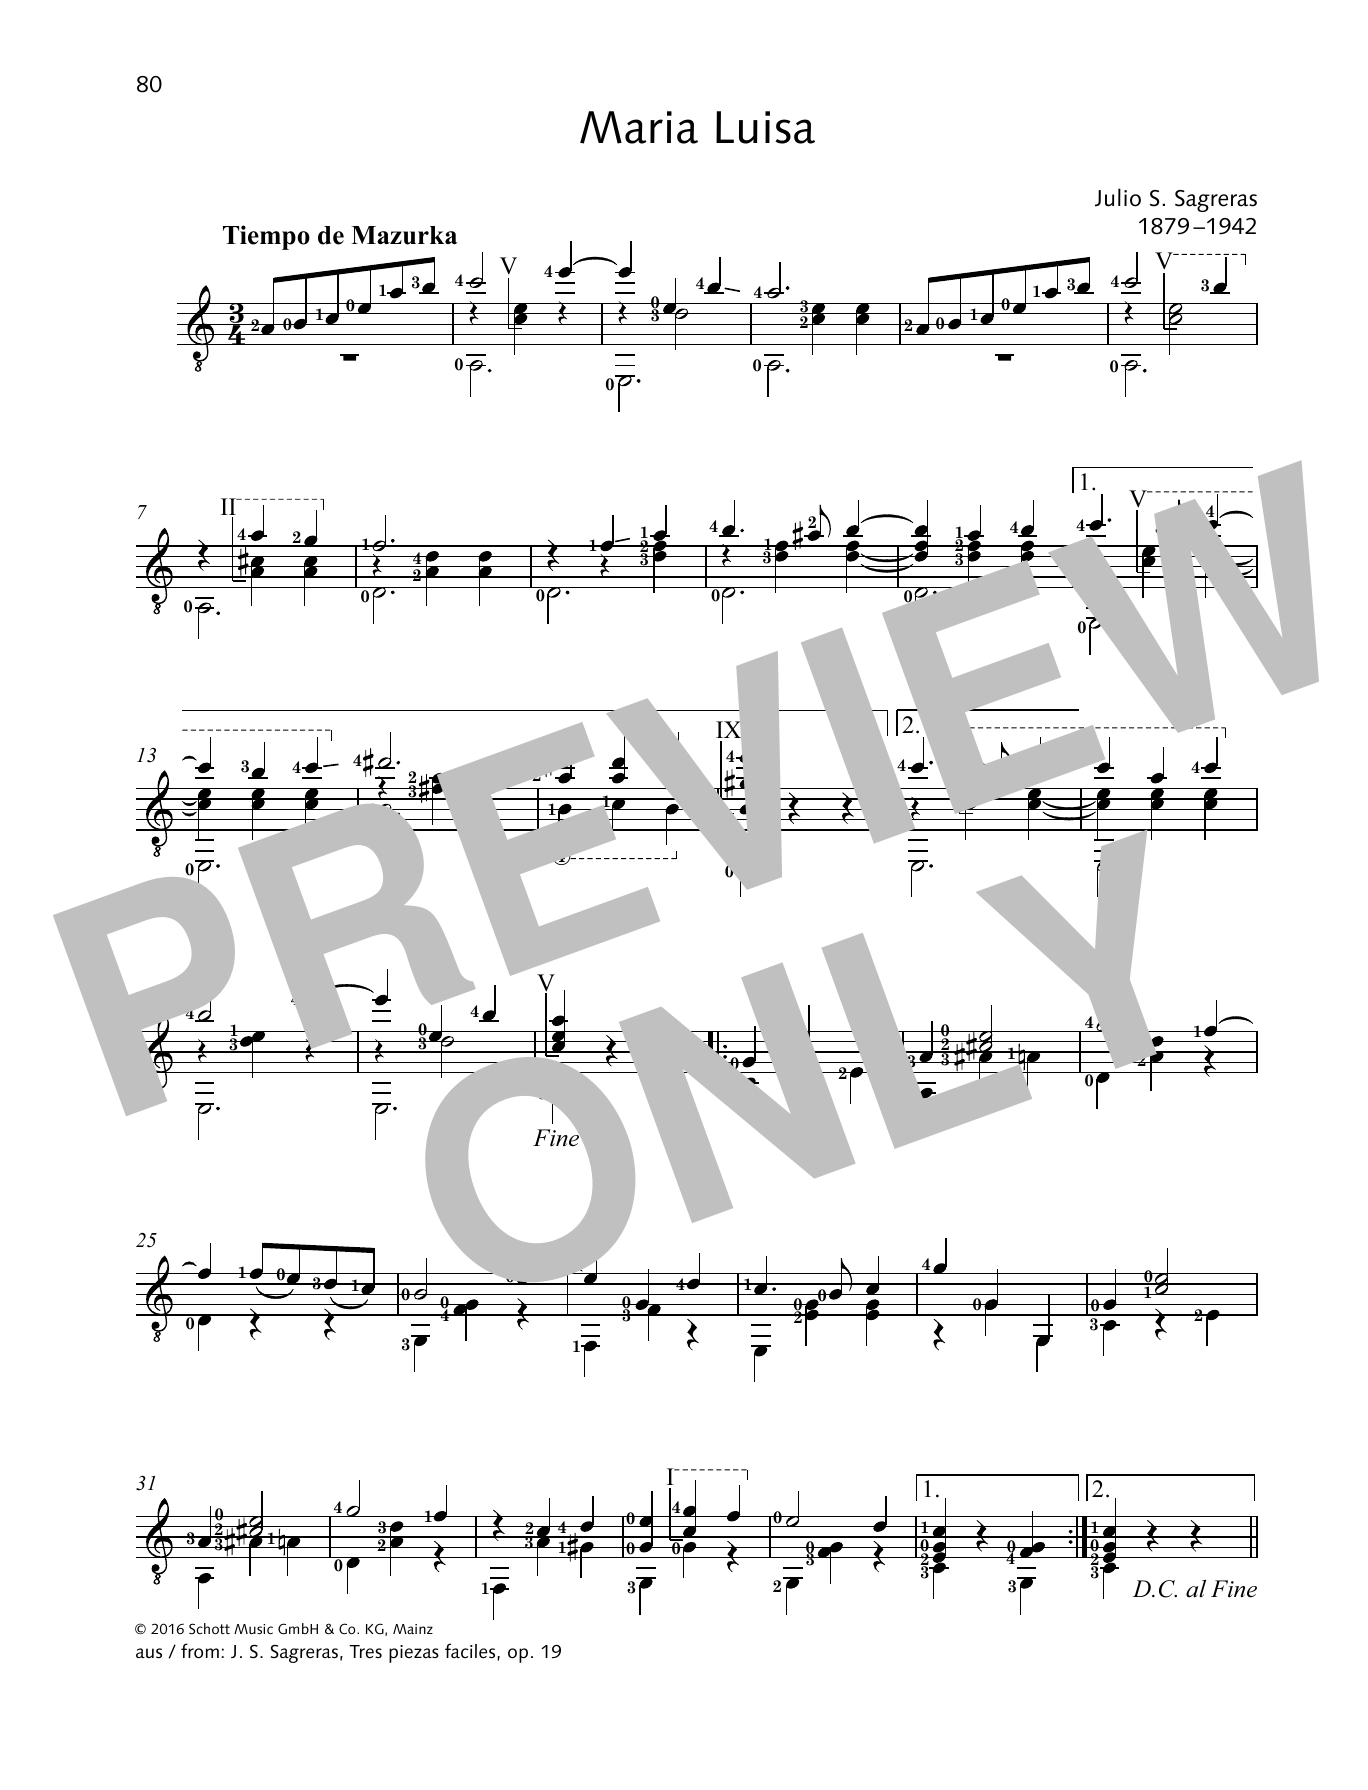 Julio Salvador Sagreras Maria Luisa Sheet Music Notes & Chords for Solo Guitar - Download or Print PDF